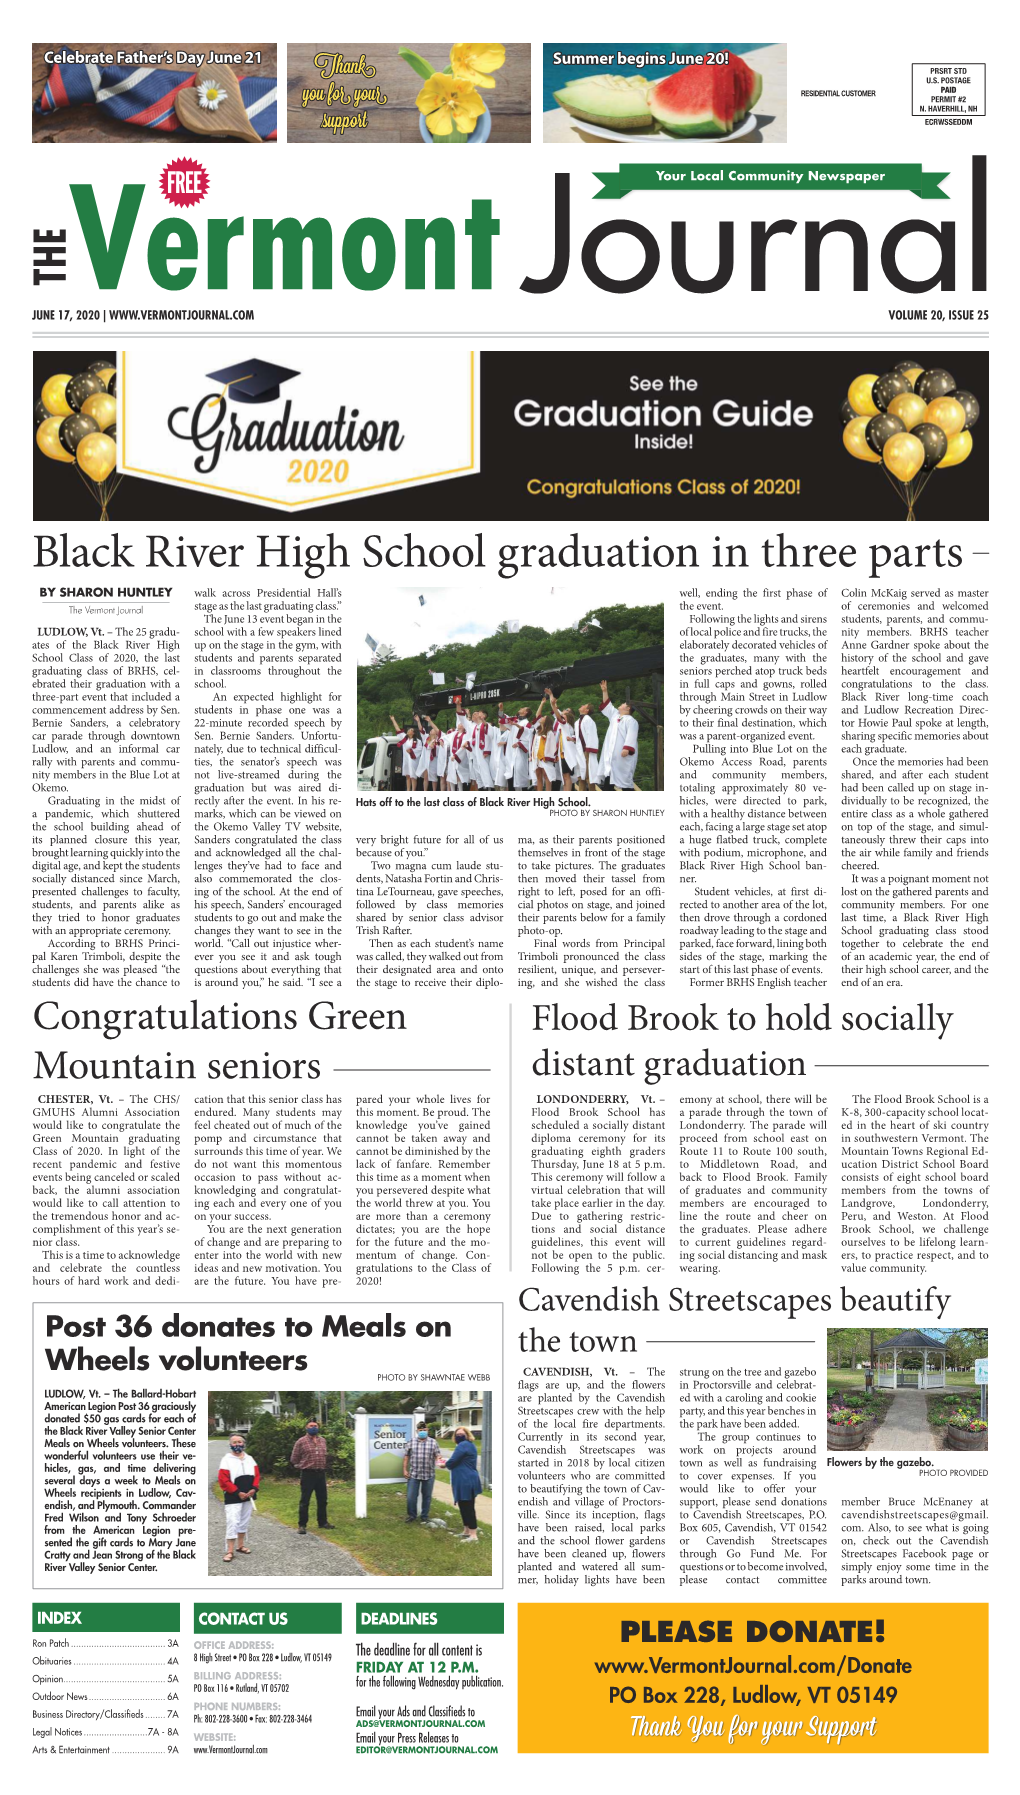 Black River High School Graduation in Three Parts